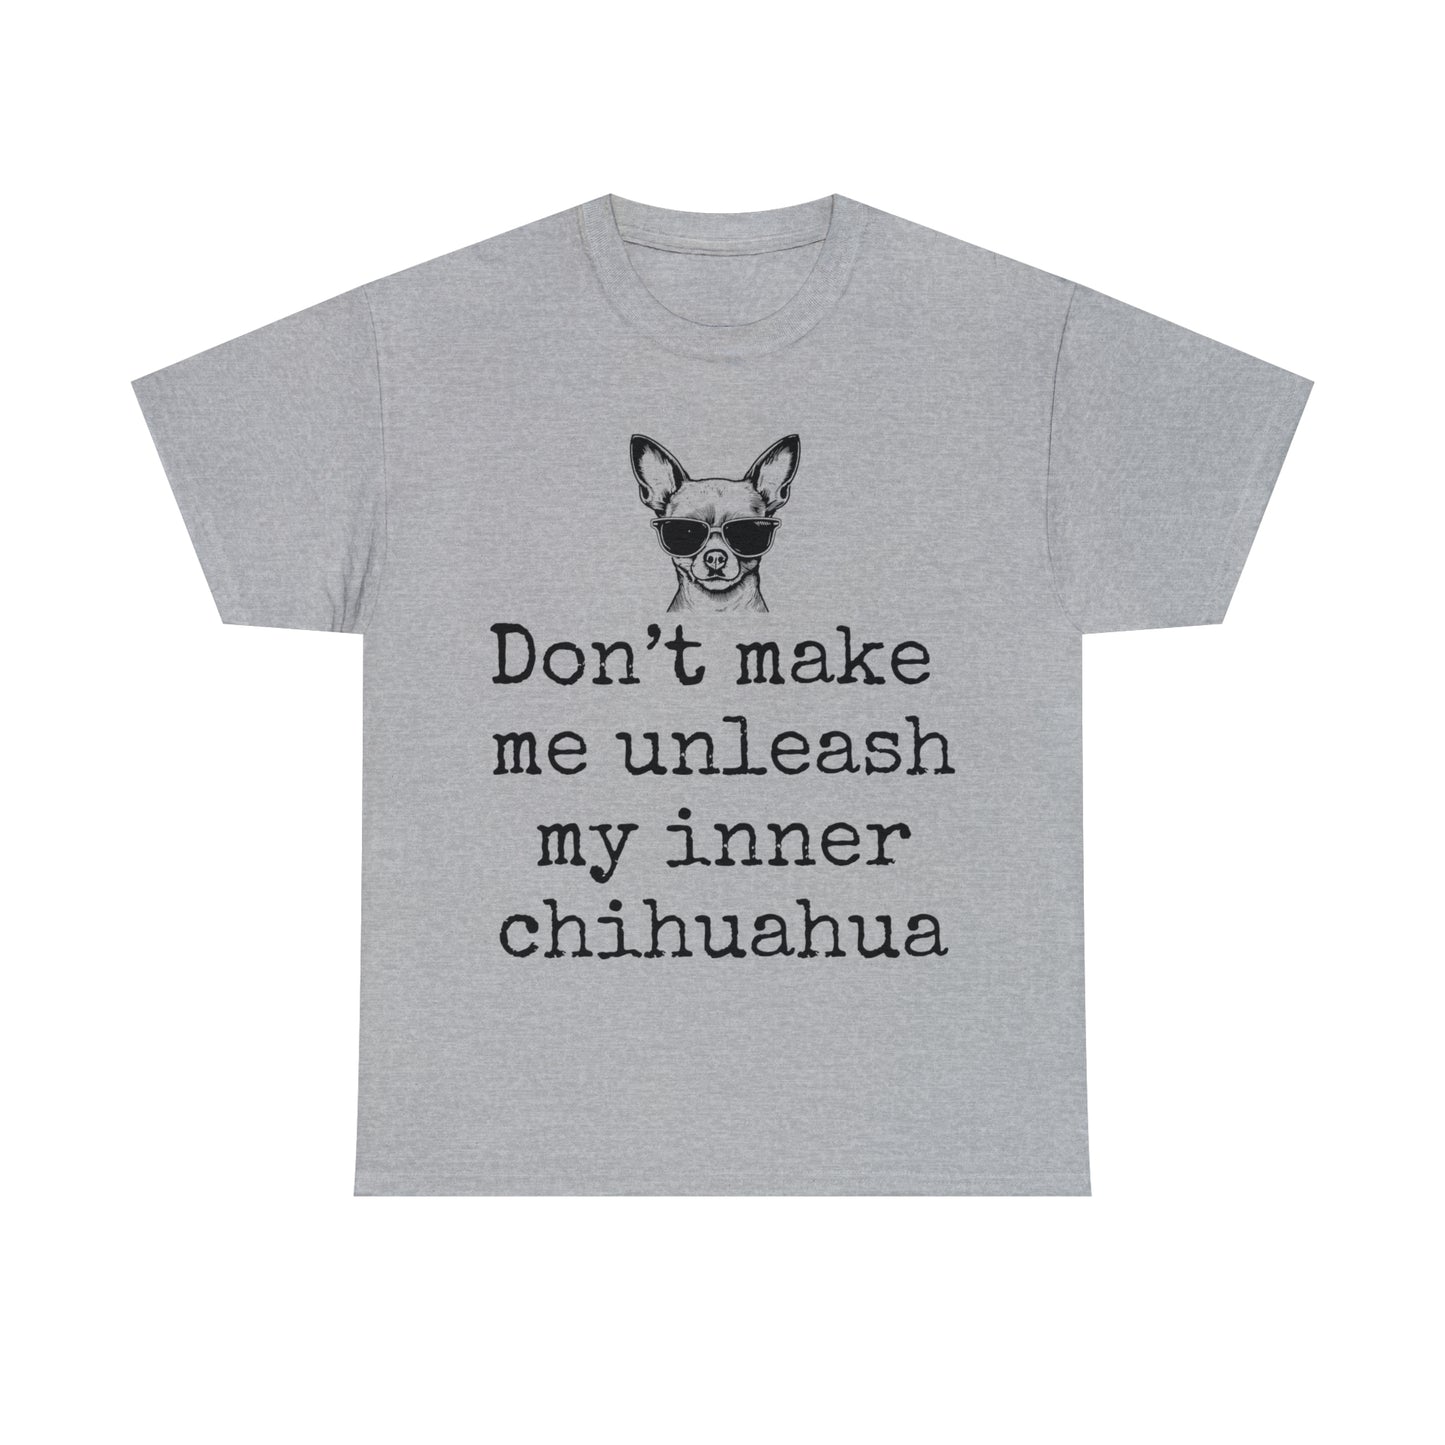 chihuahua t-shirts